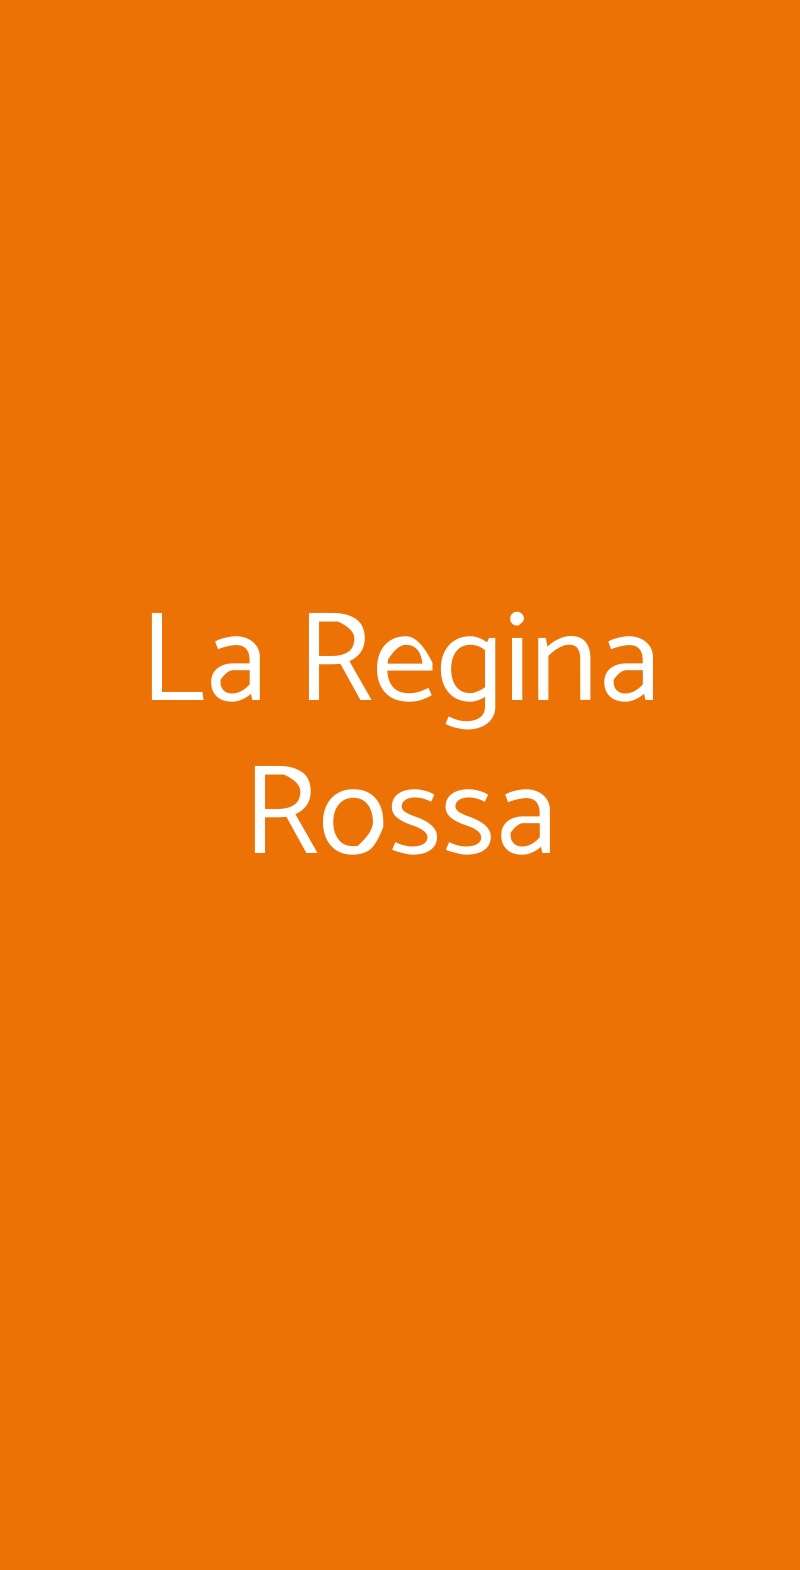 La Regina Rossa Milano menù 1 pagina